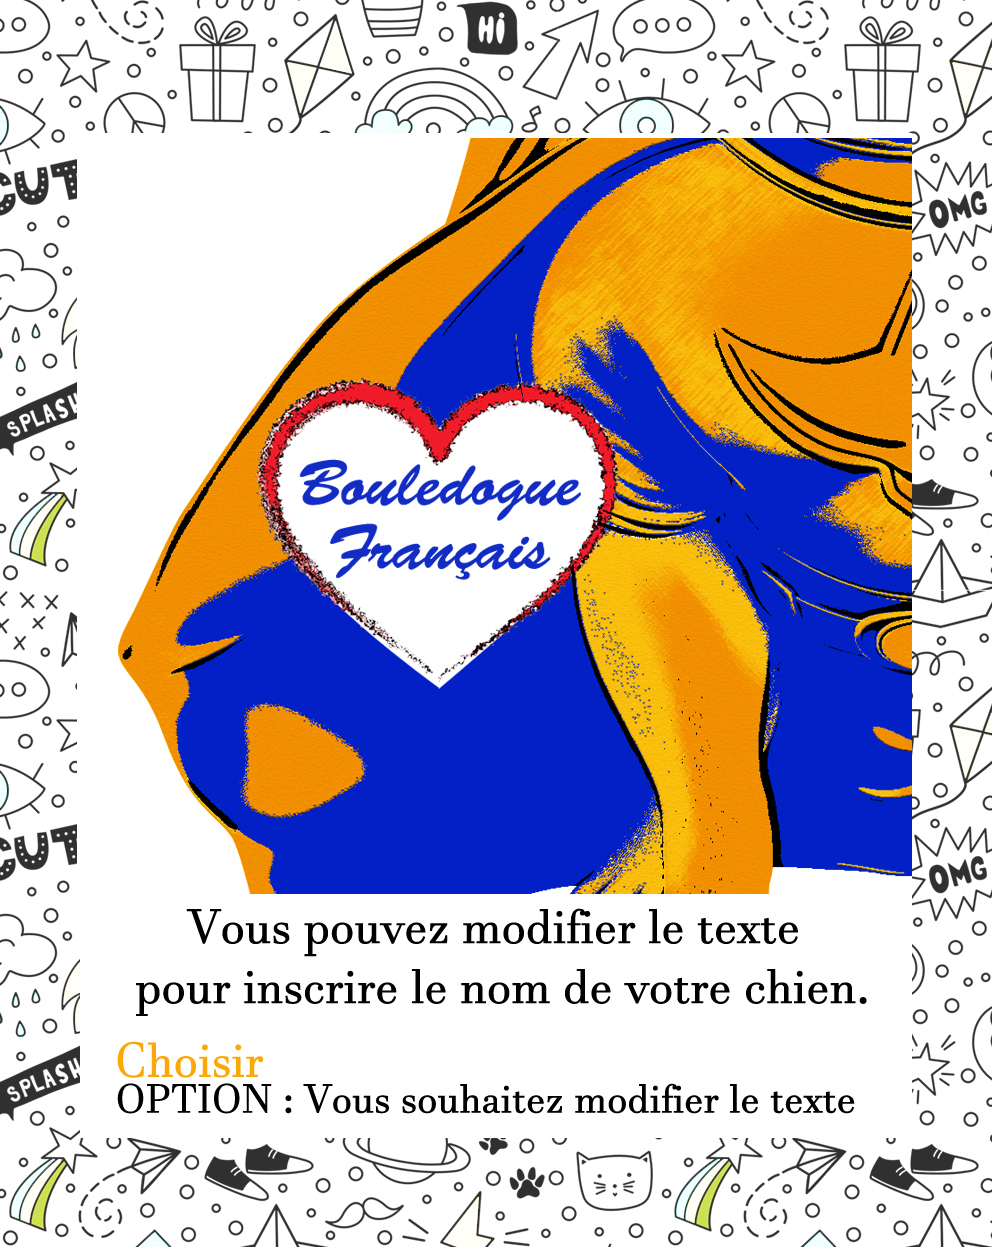 Bouledogue Français texte modifiable